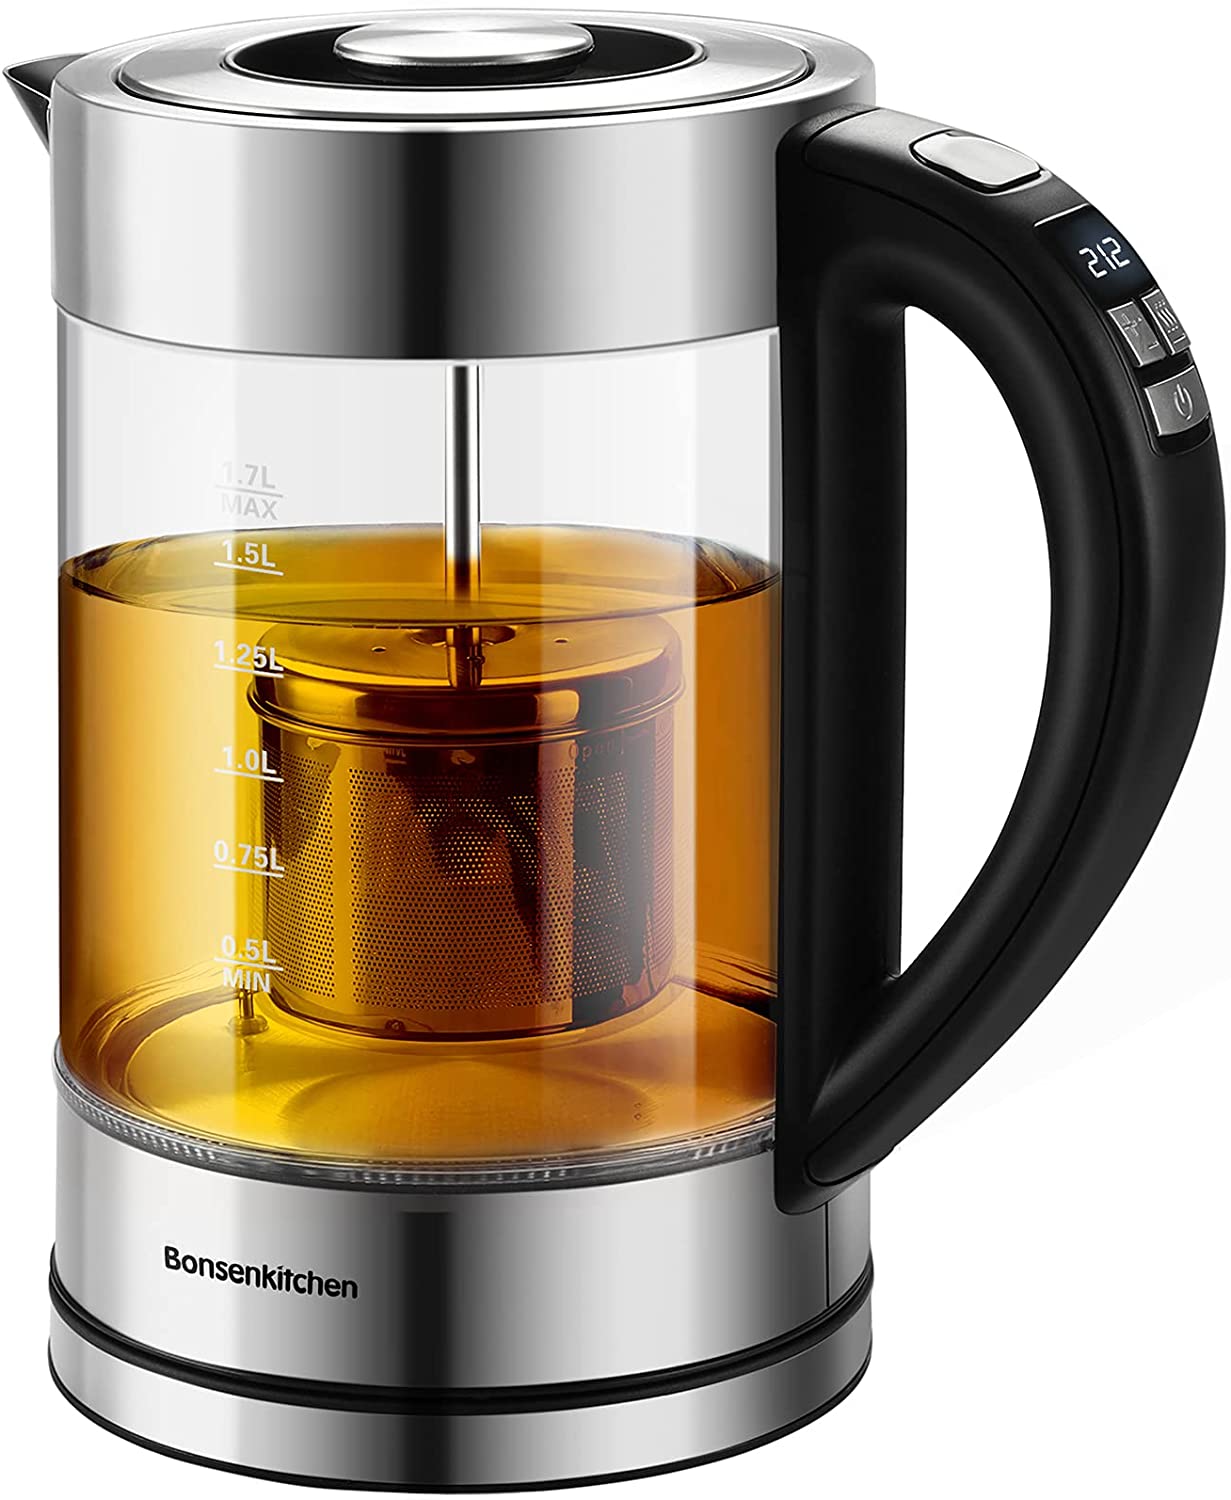 Bonsenkitchen-Electric-Tea-Kettle-with-Tea-Infuser-min